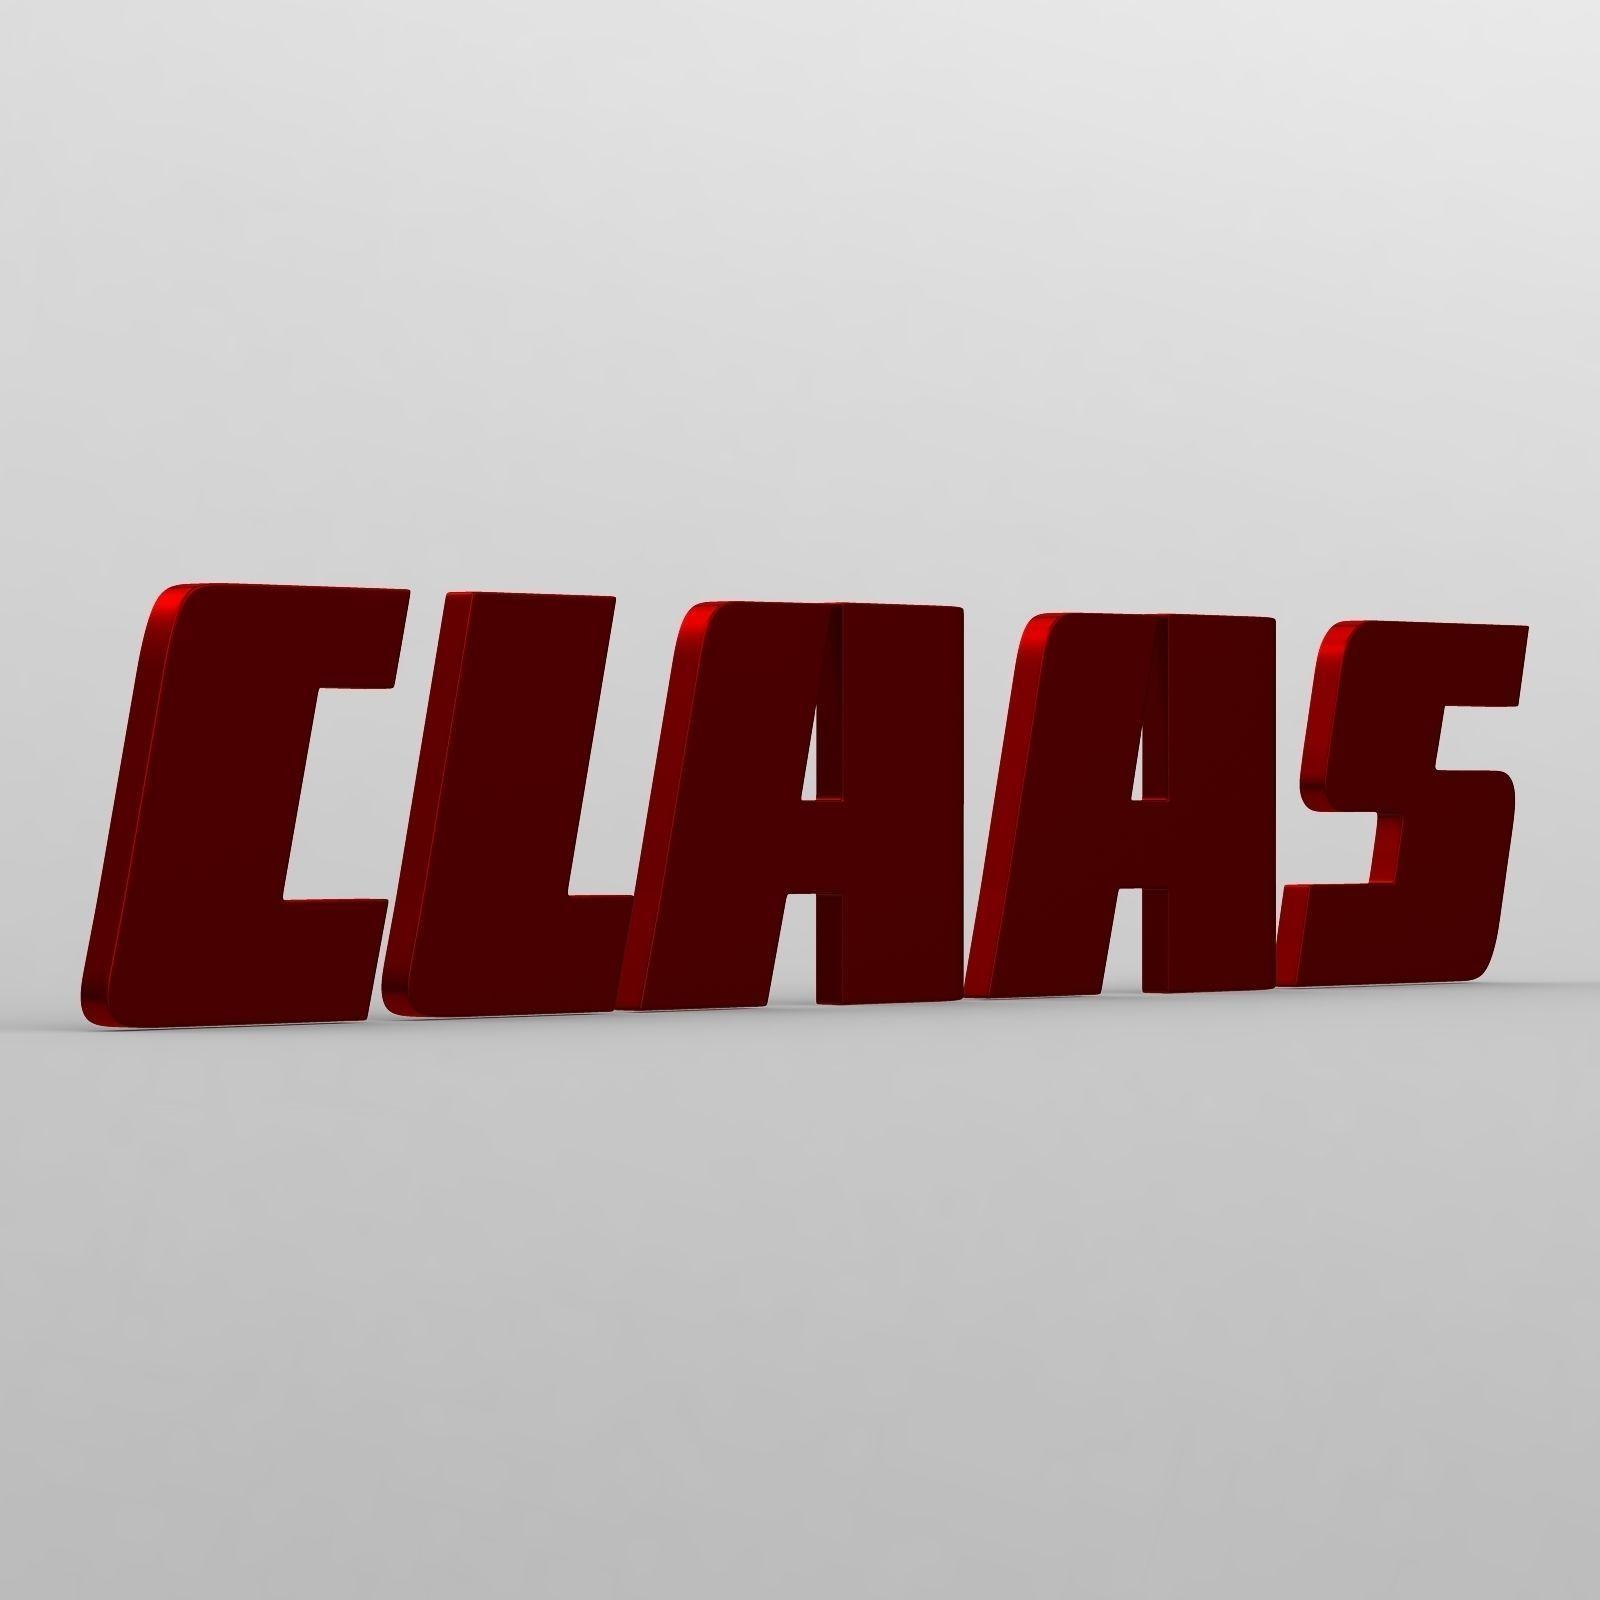 Claas Logo - claas logo 3D | CGTrader